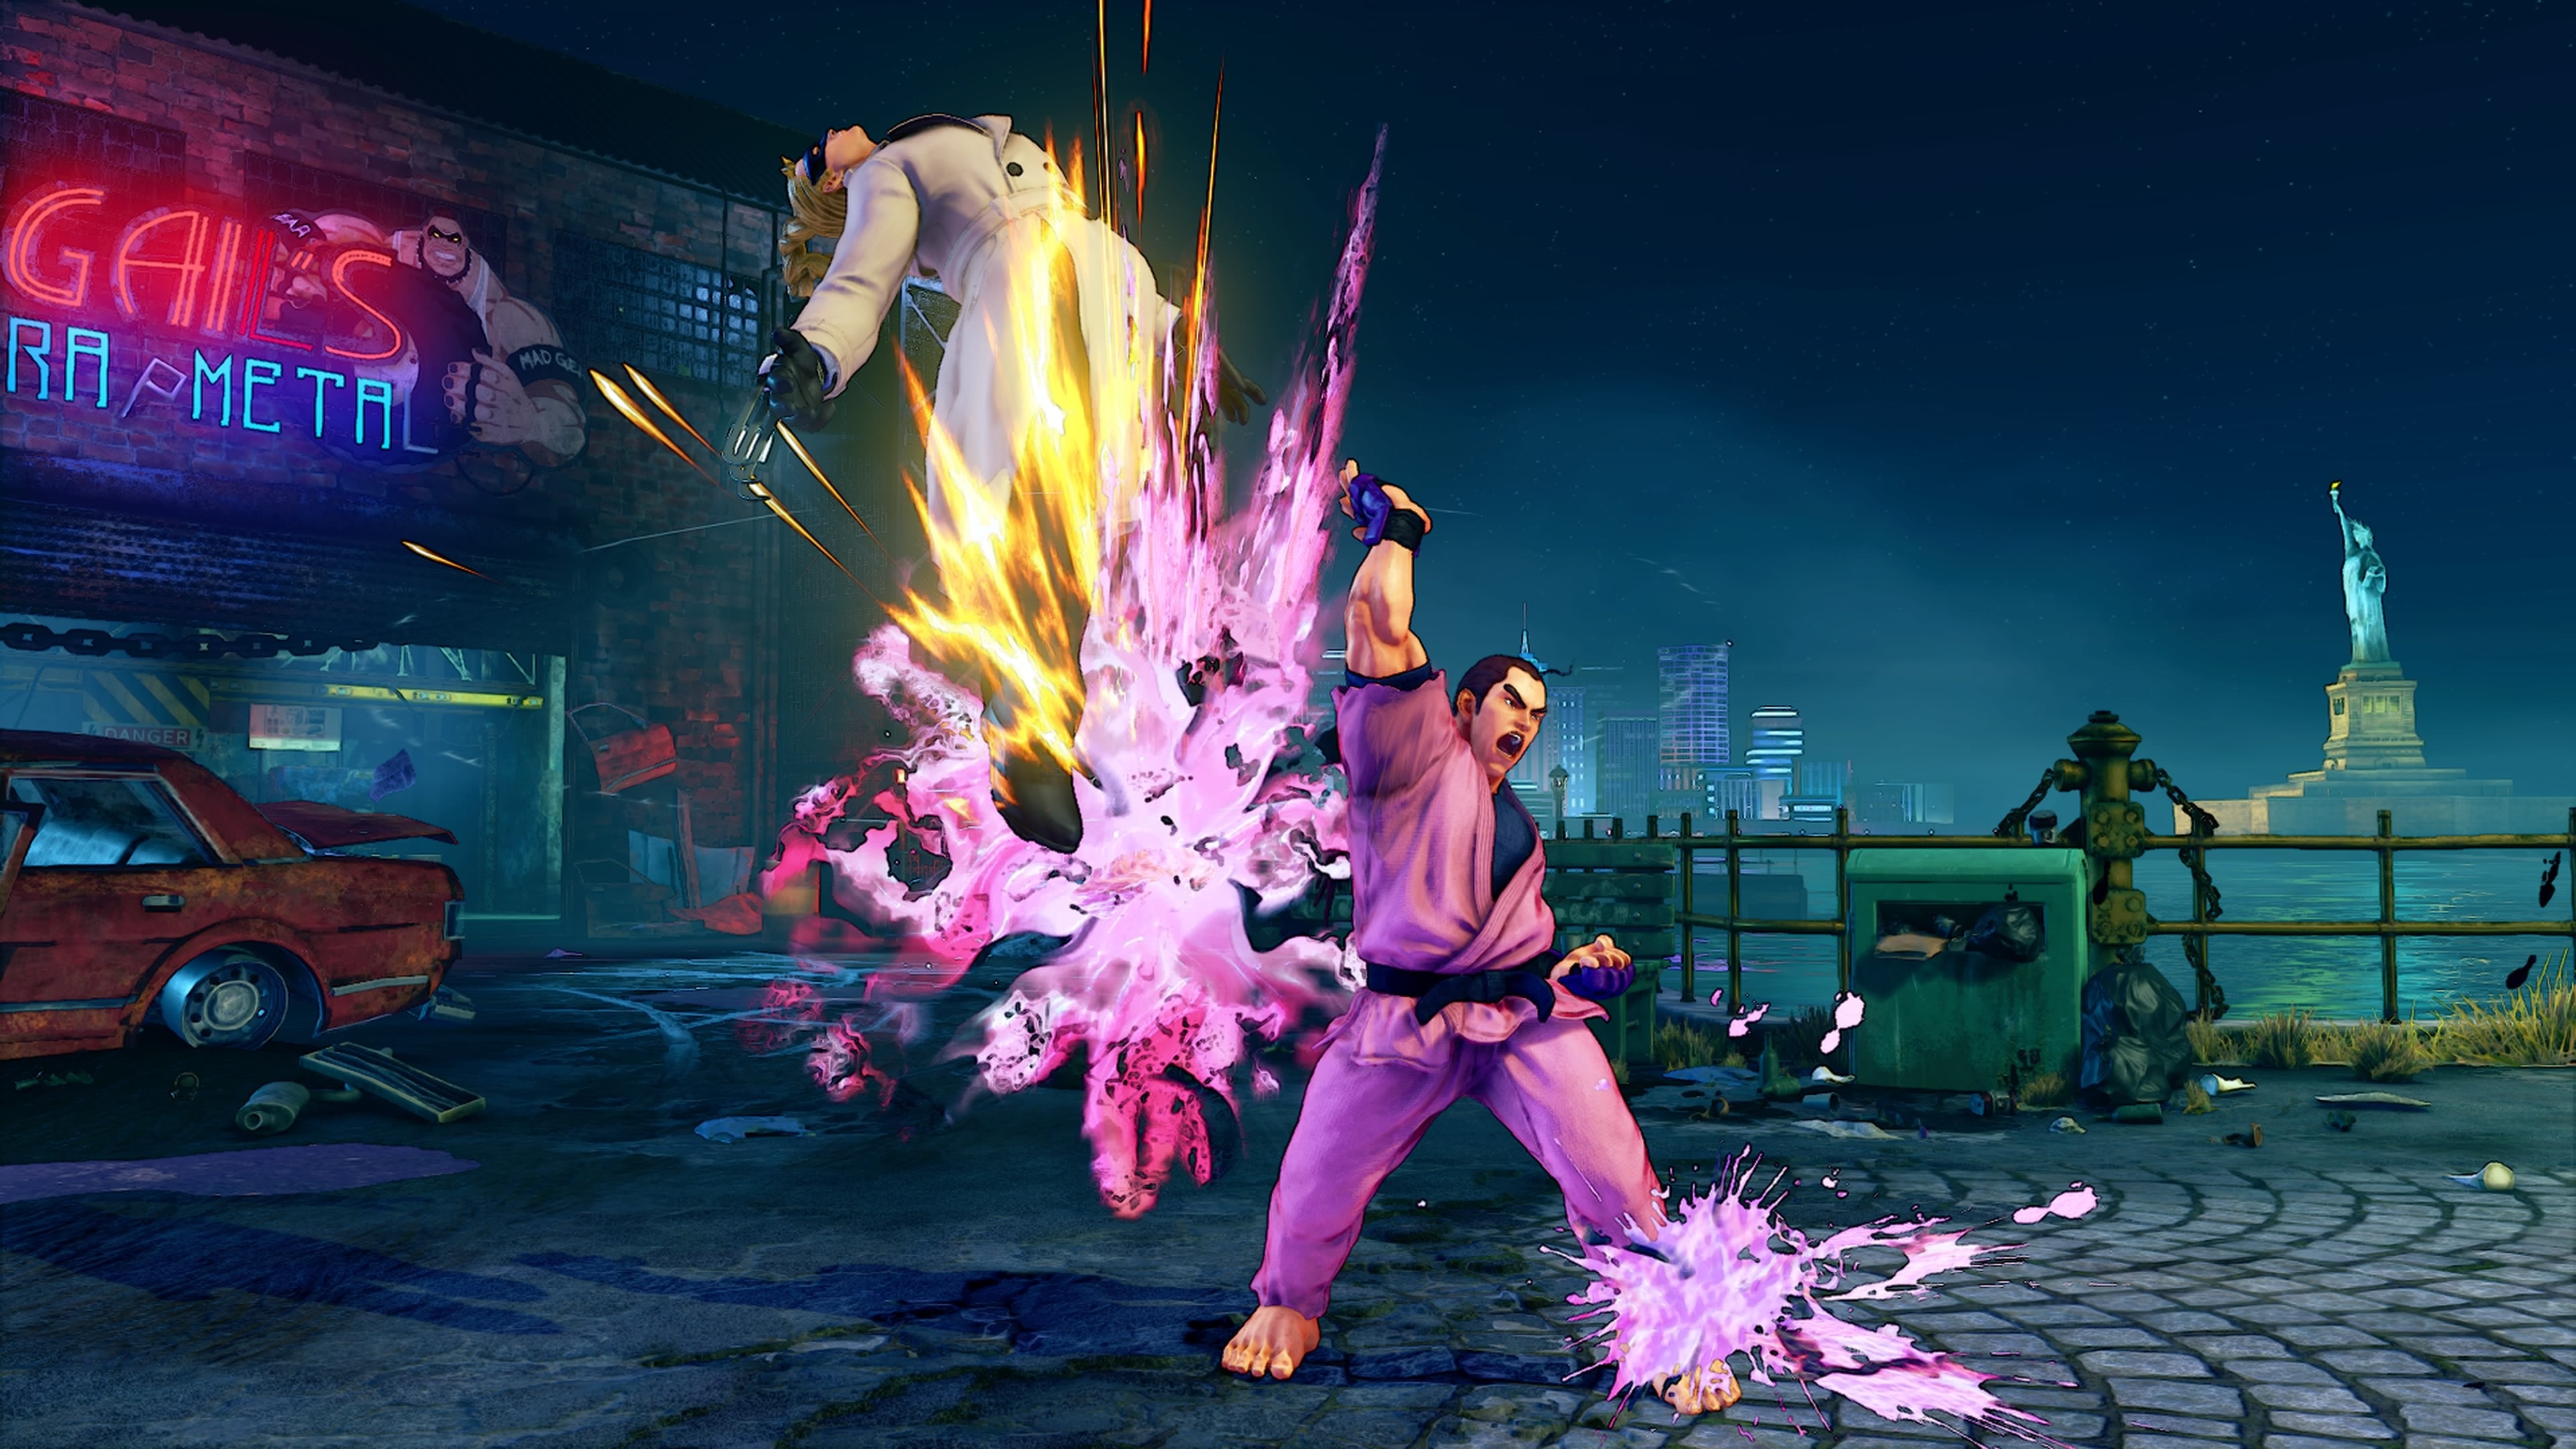 Street Fighter V PlayStation Store Image Provides More Season 2